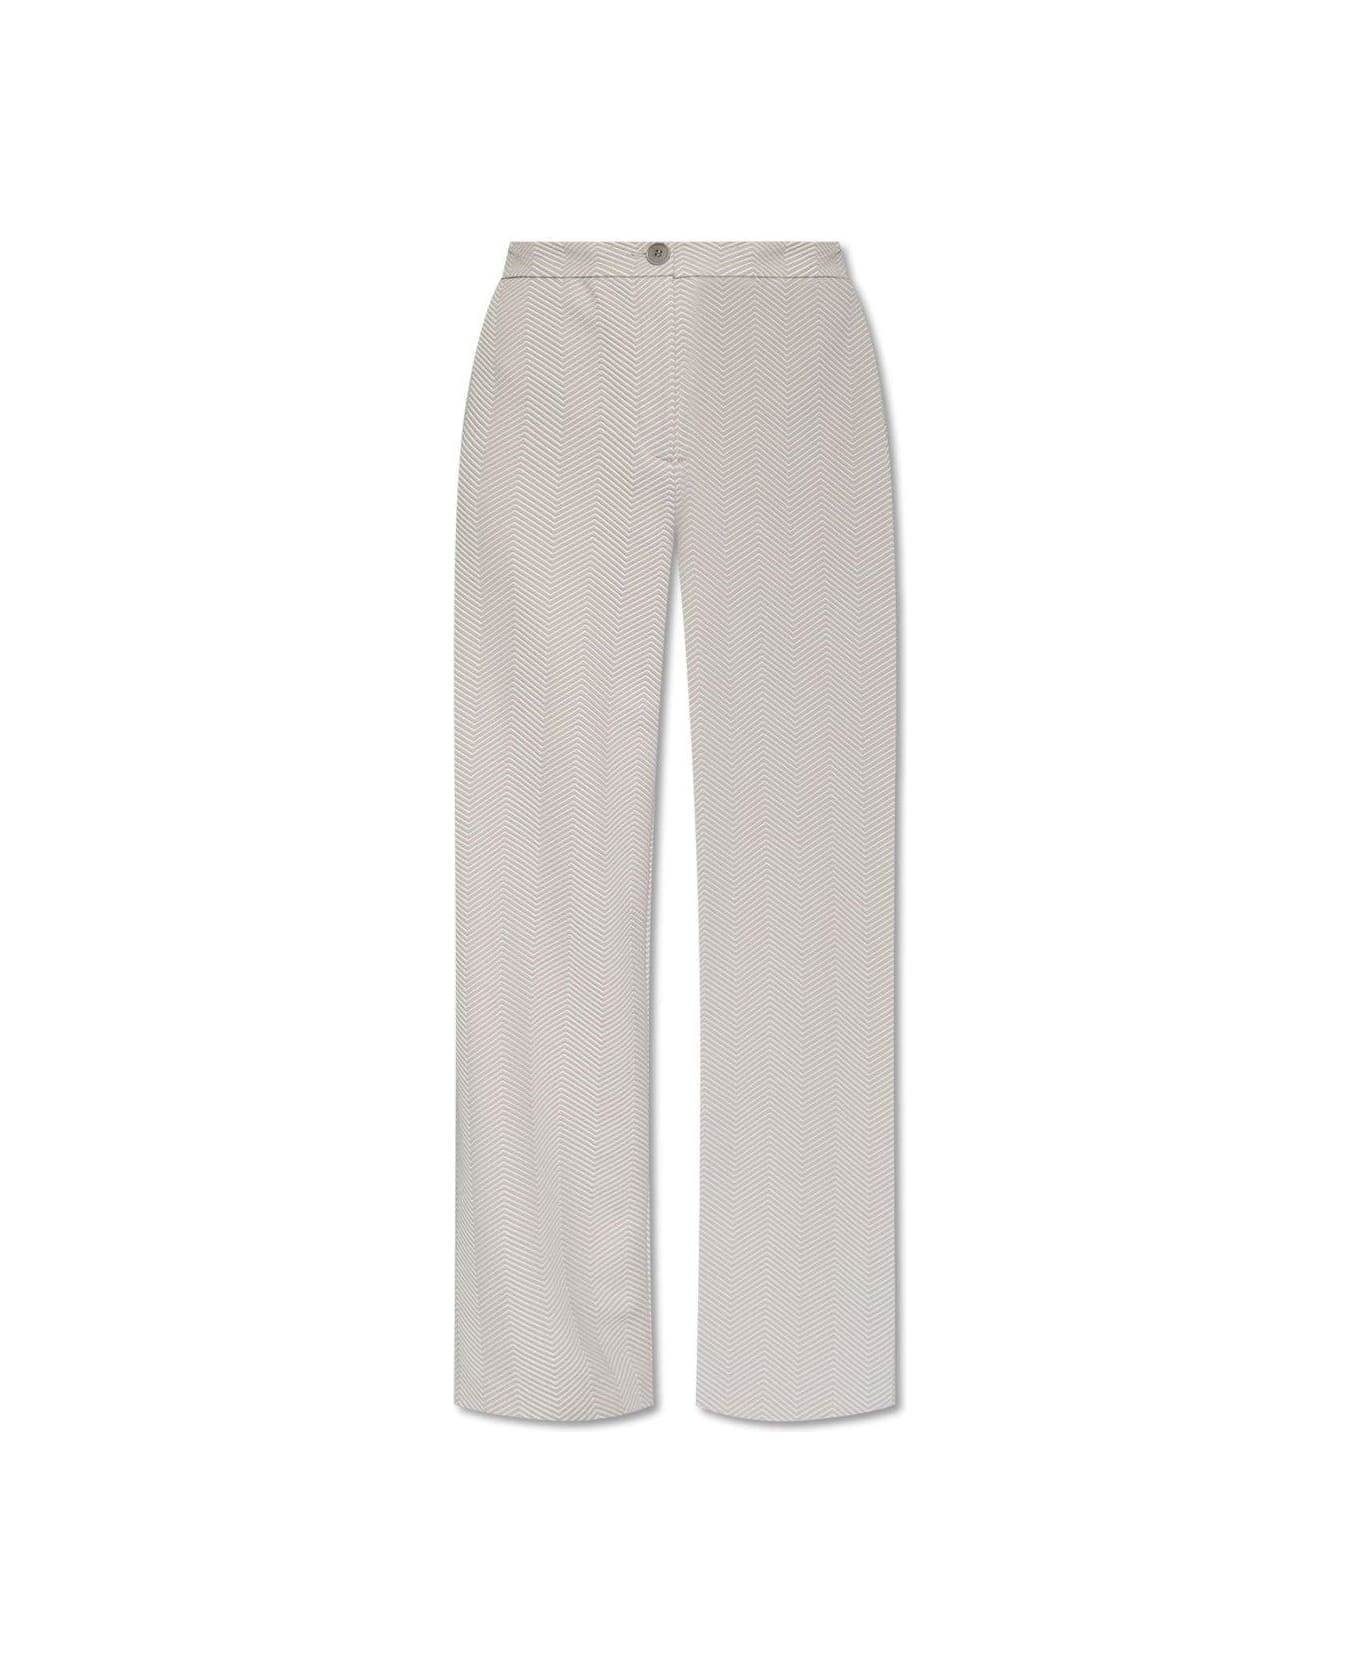 Emporio Armani Herringbone Trousers - Light Grey